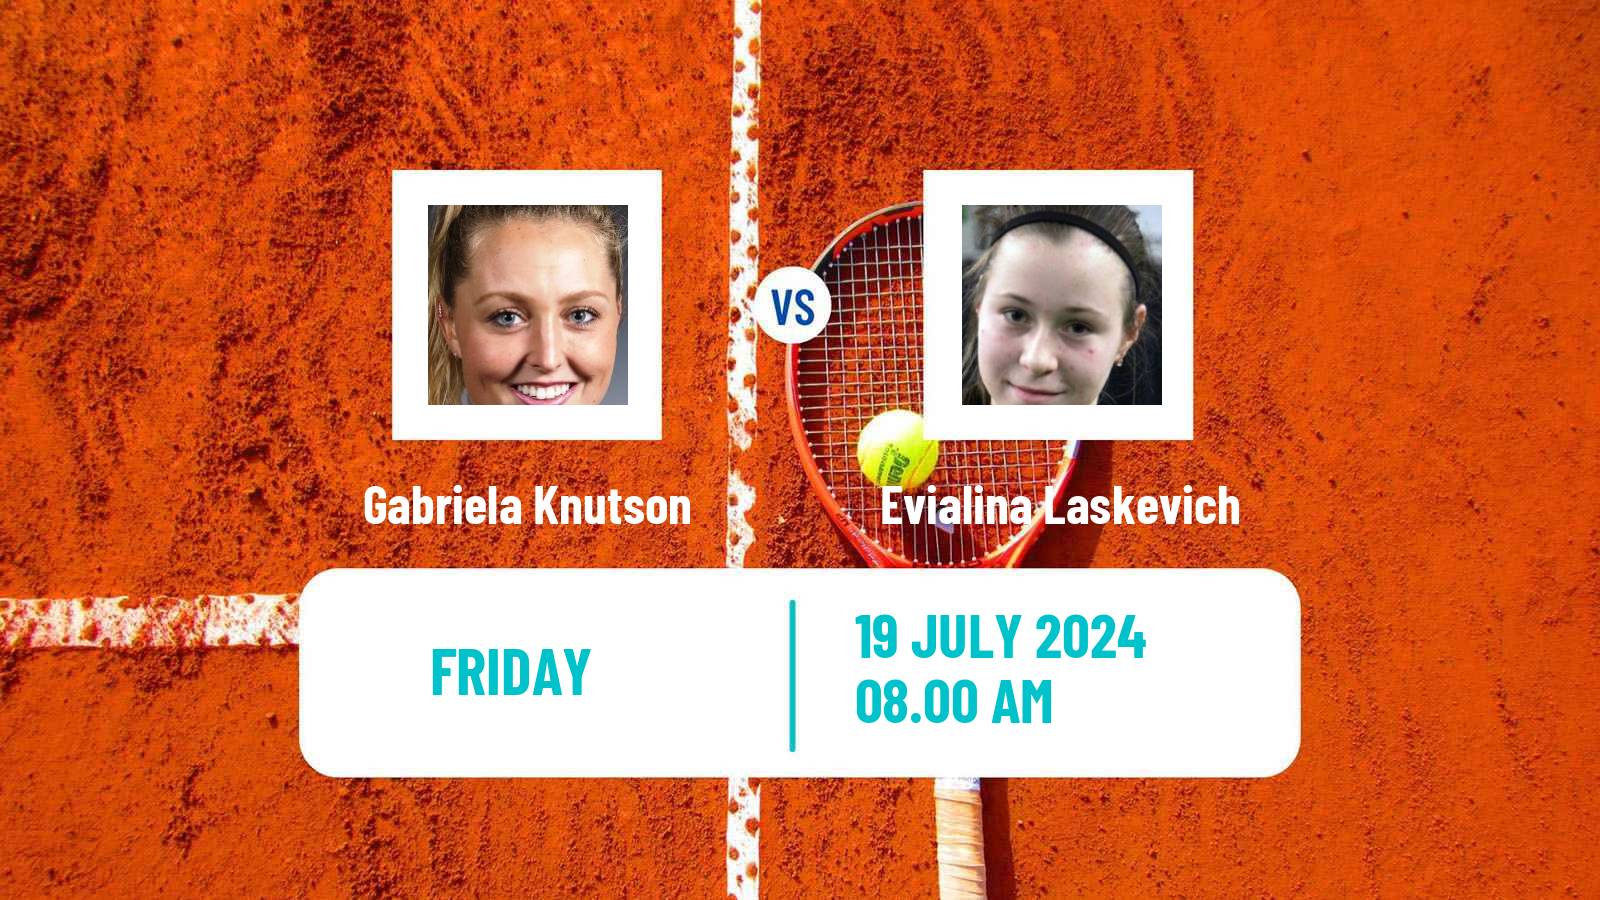 Tennis ITF W75 Porto 2 Women Gabriela Knutson - Evialina Laskevich